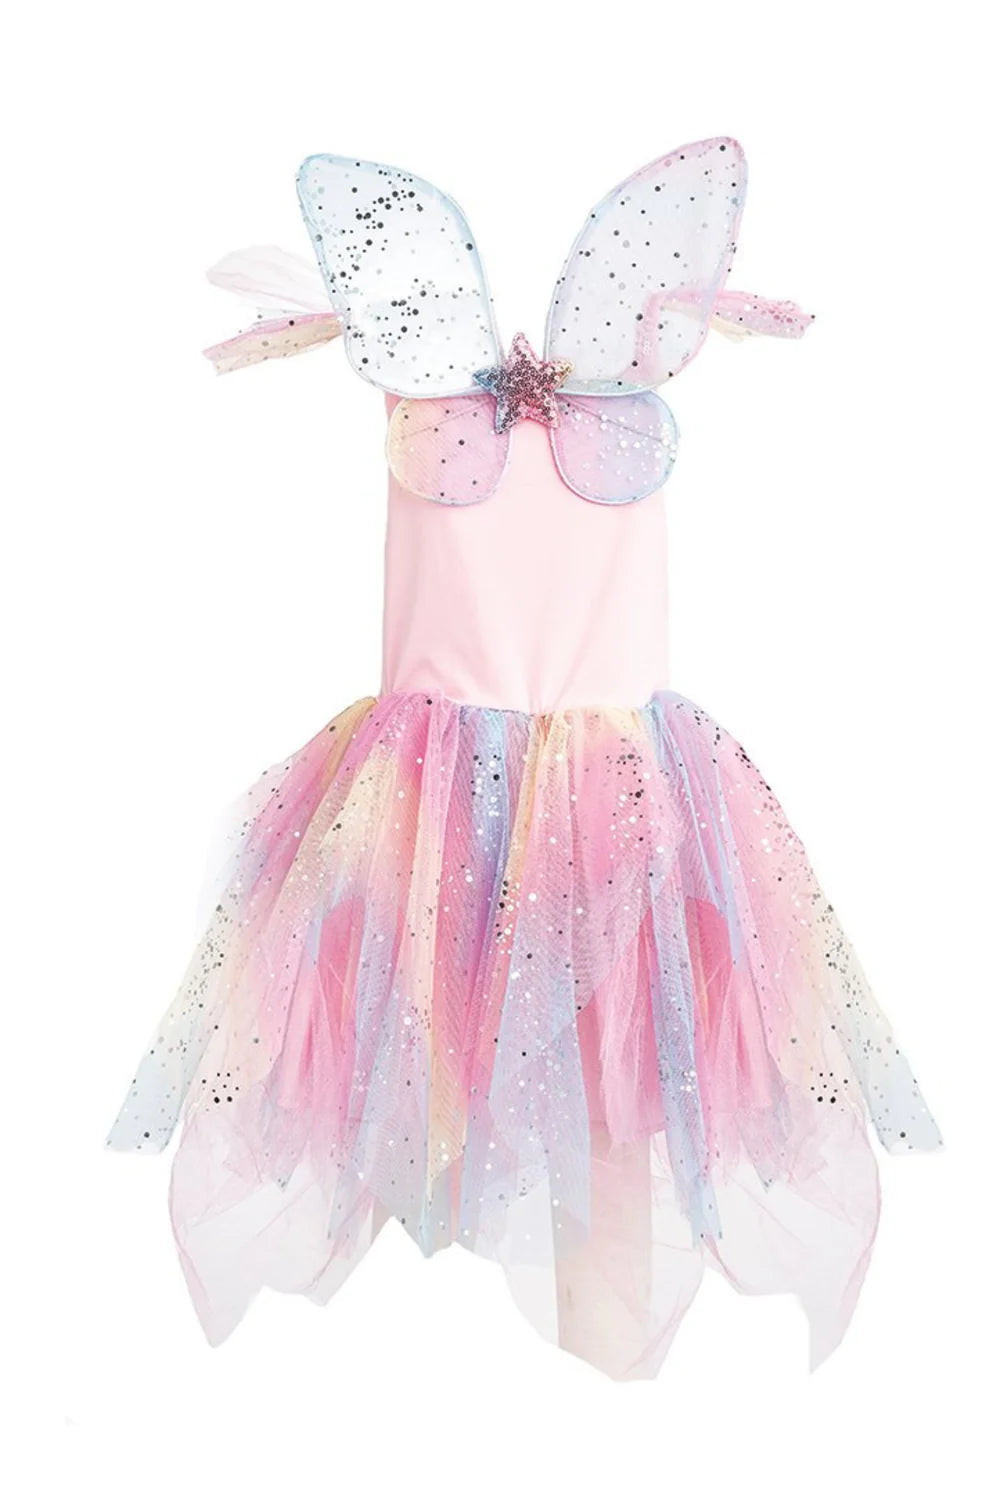 Rainbow Fairy Dress and Wings